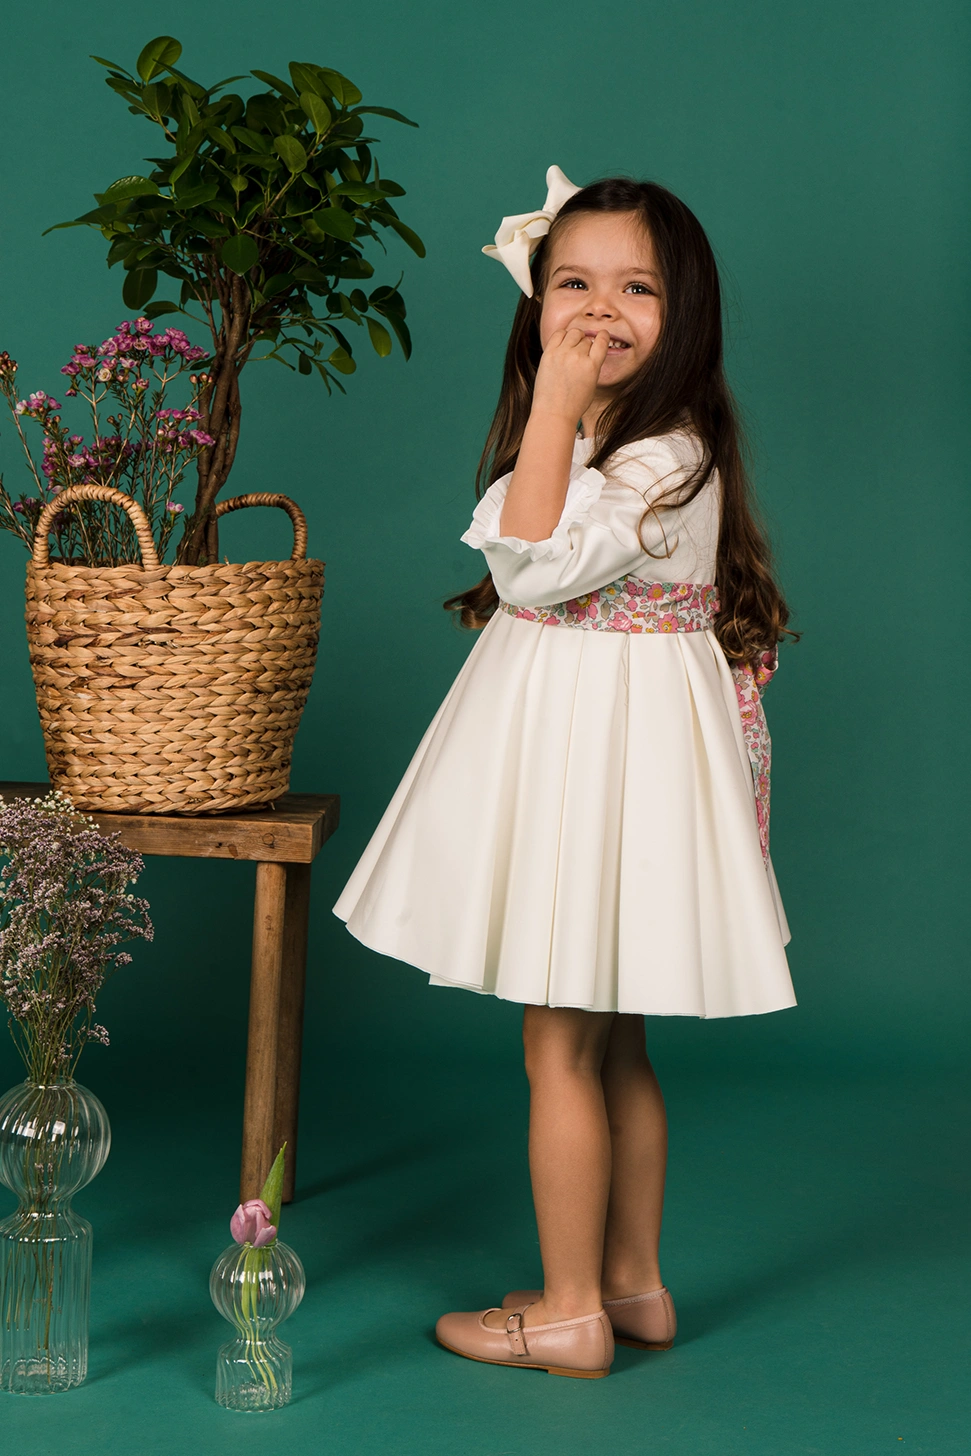 Designer Childrenswear Beloved By The British Royal Family